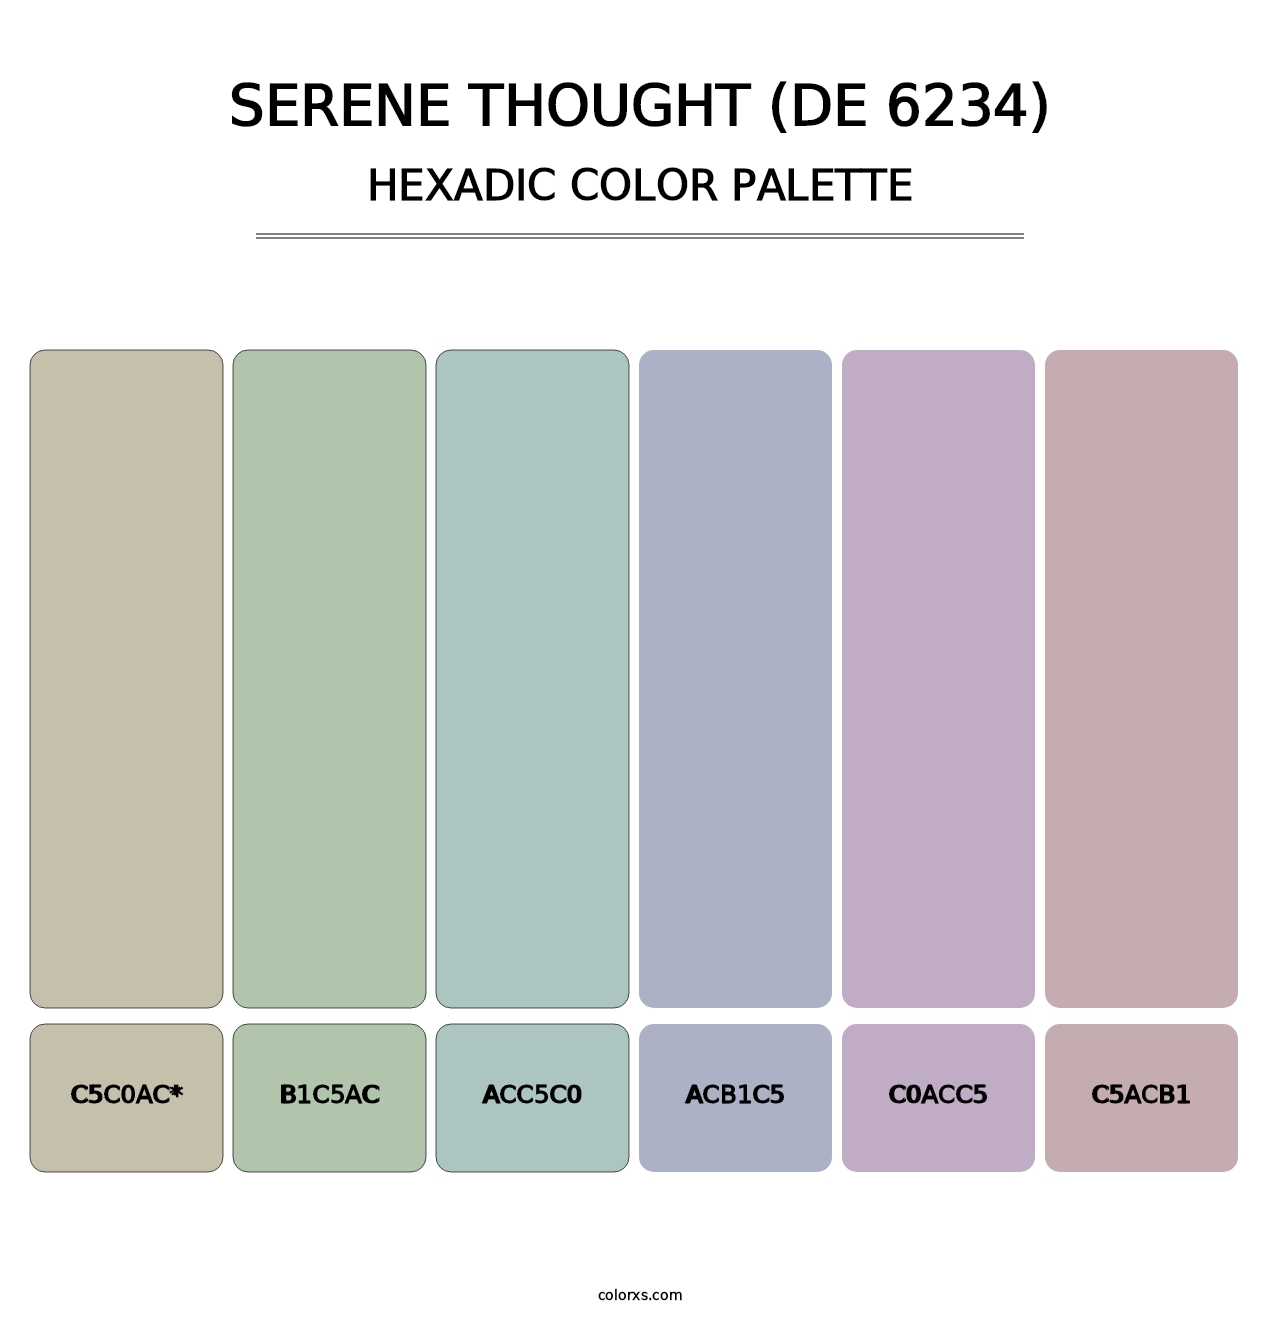 Serene Thought (DE 6234) - Hexadic Color Palette